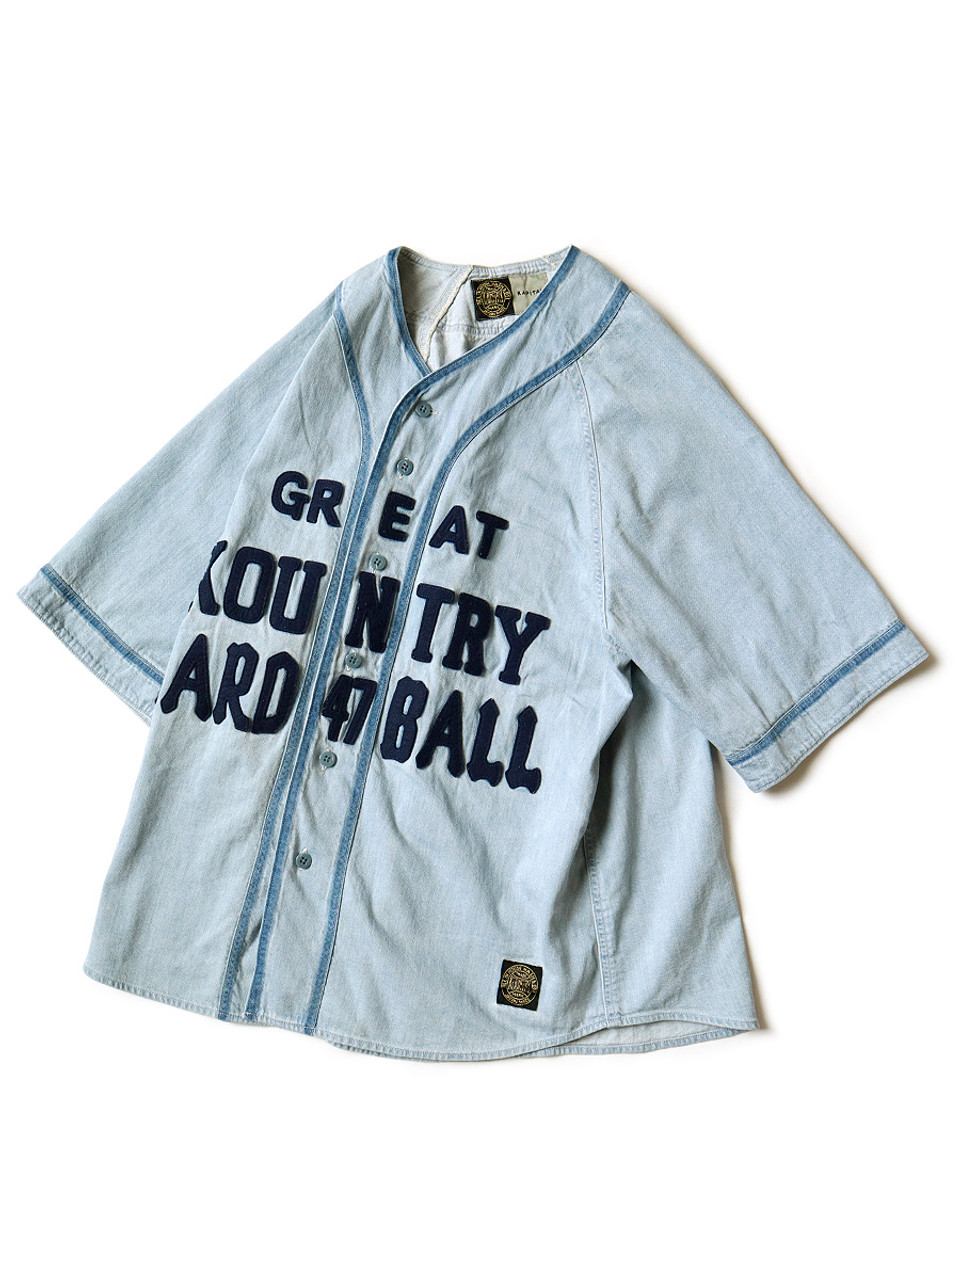 Kapital Kountry 8oz Reconstruction Denim Great Kountry Baseball Shirt -  Indigo